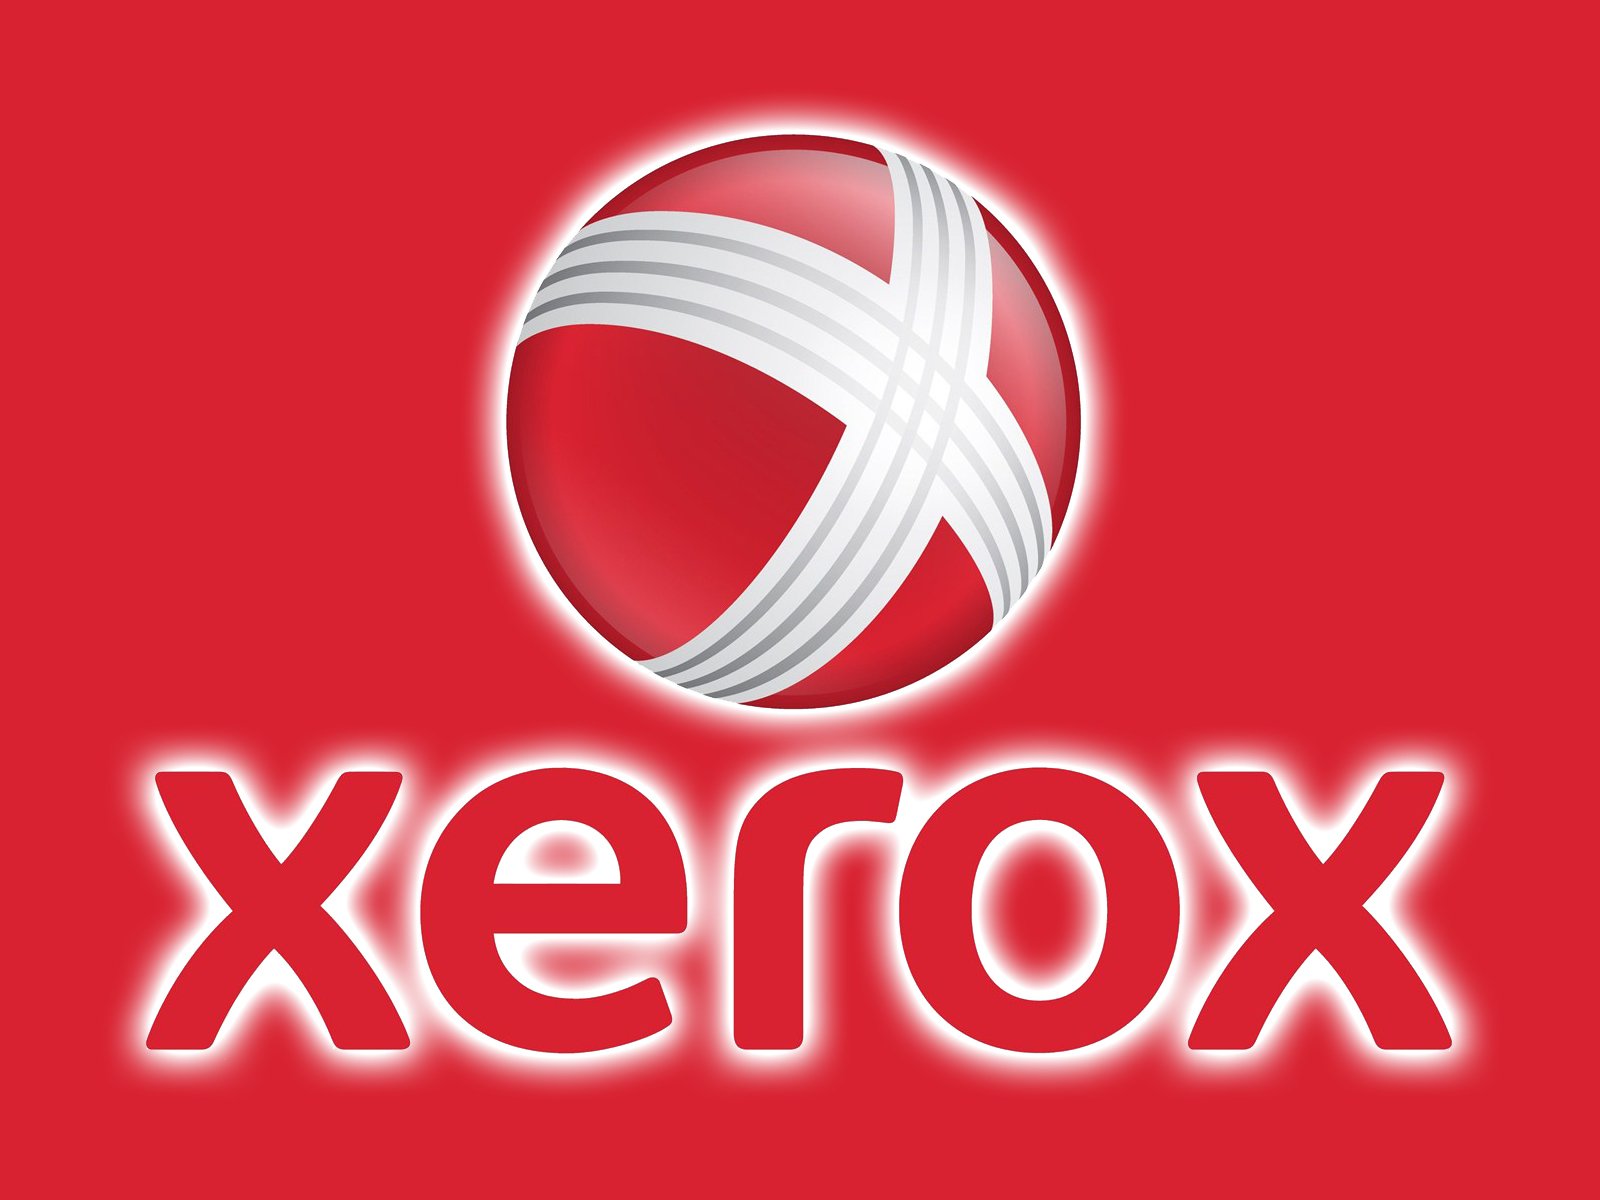 Xerox Logo, Xerox Symbol, Meaning, History and Evolution